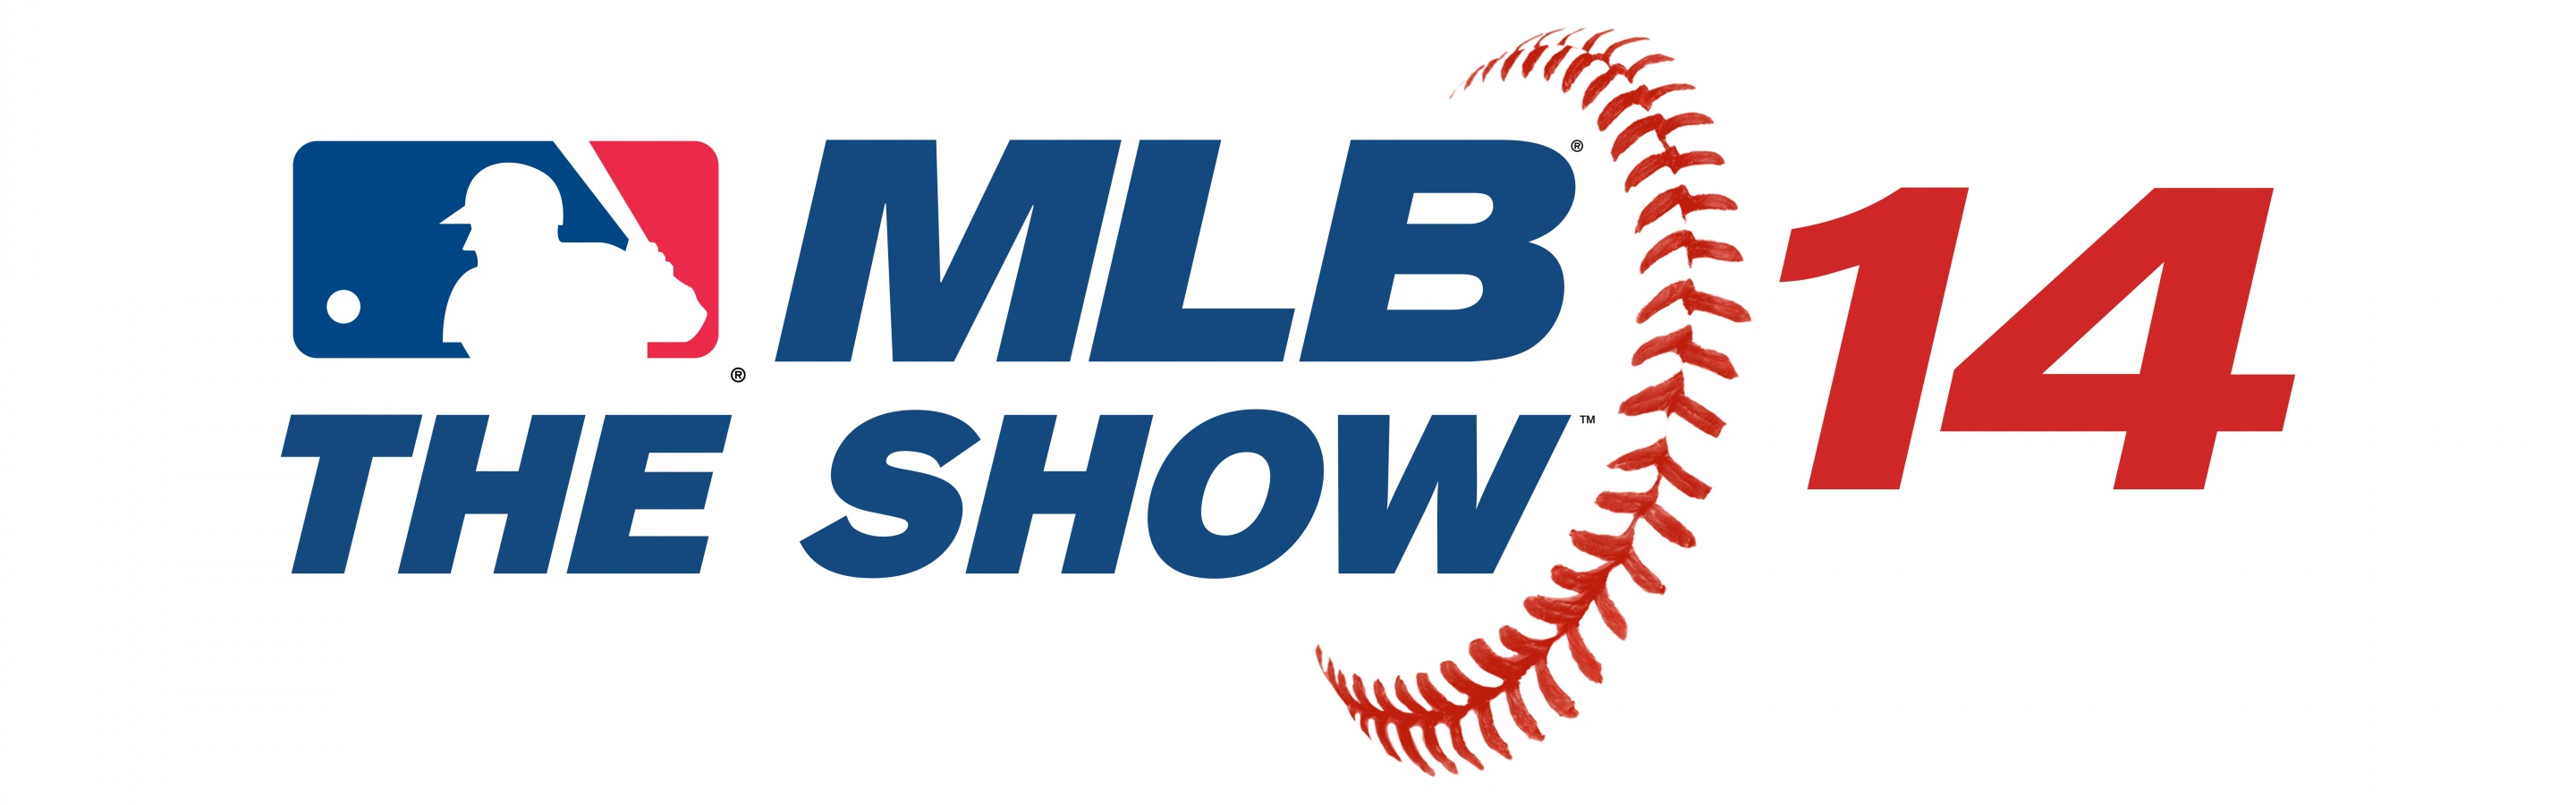 MLB 14 The Show - Games Logo